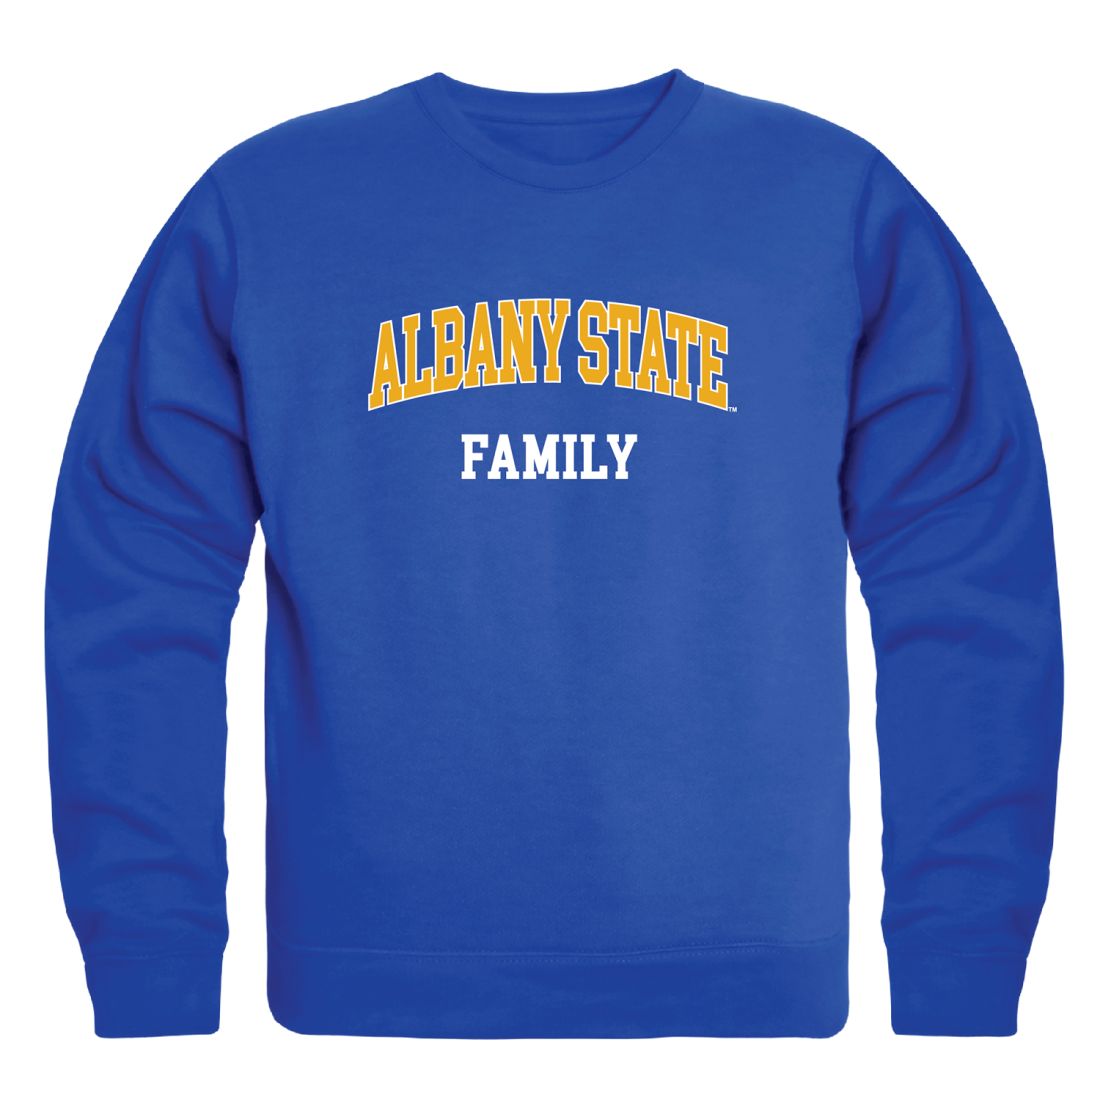 ASU-Albany-State-University-Golden-Rams-Family-Fleece-Crewneck-Pullover-Sweatshirt